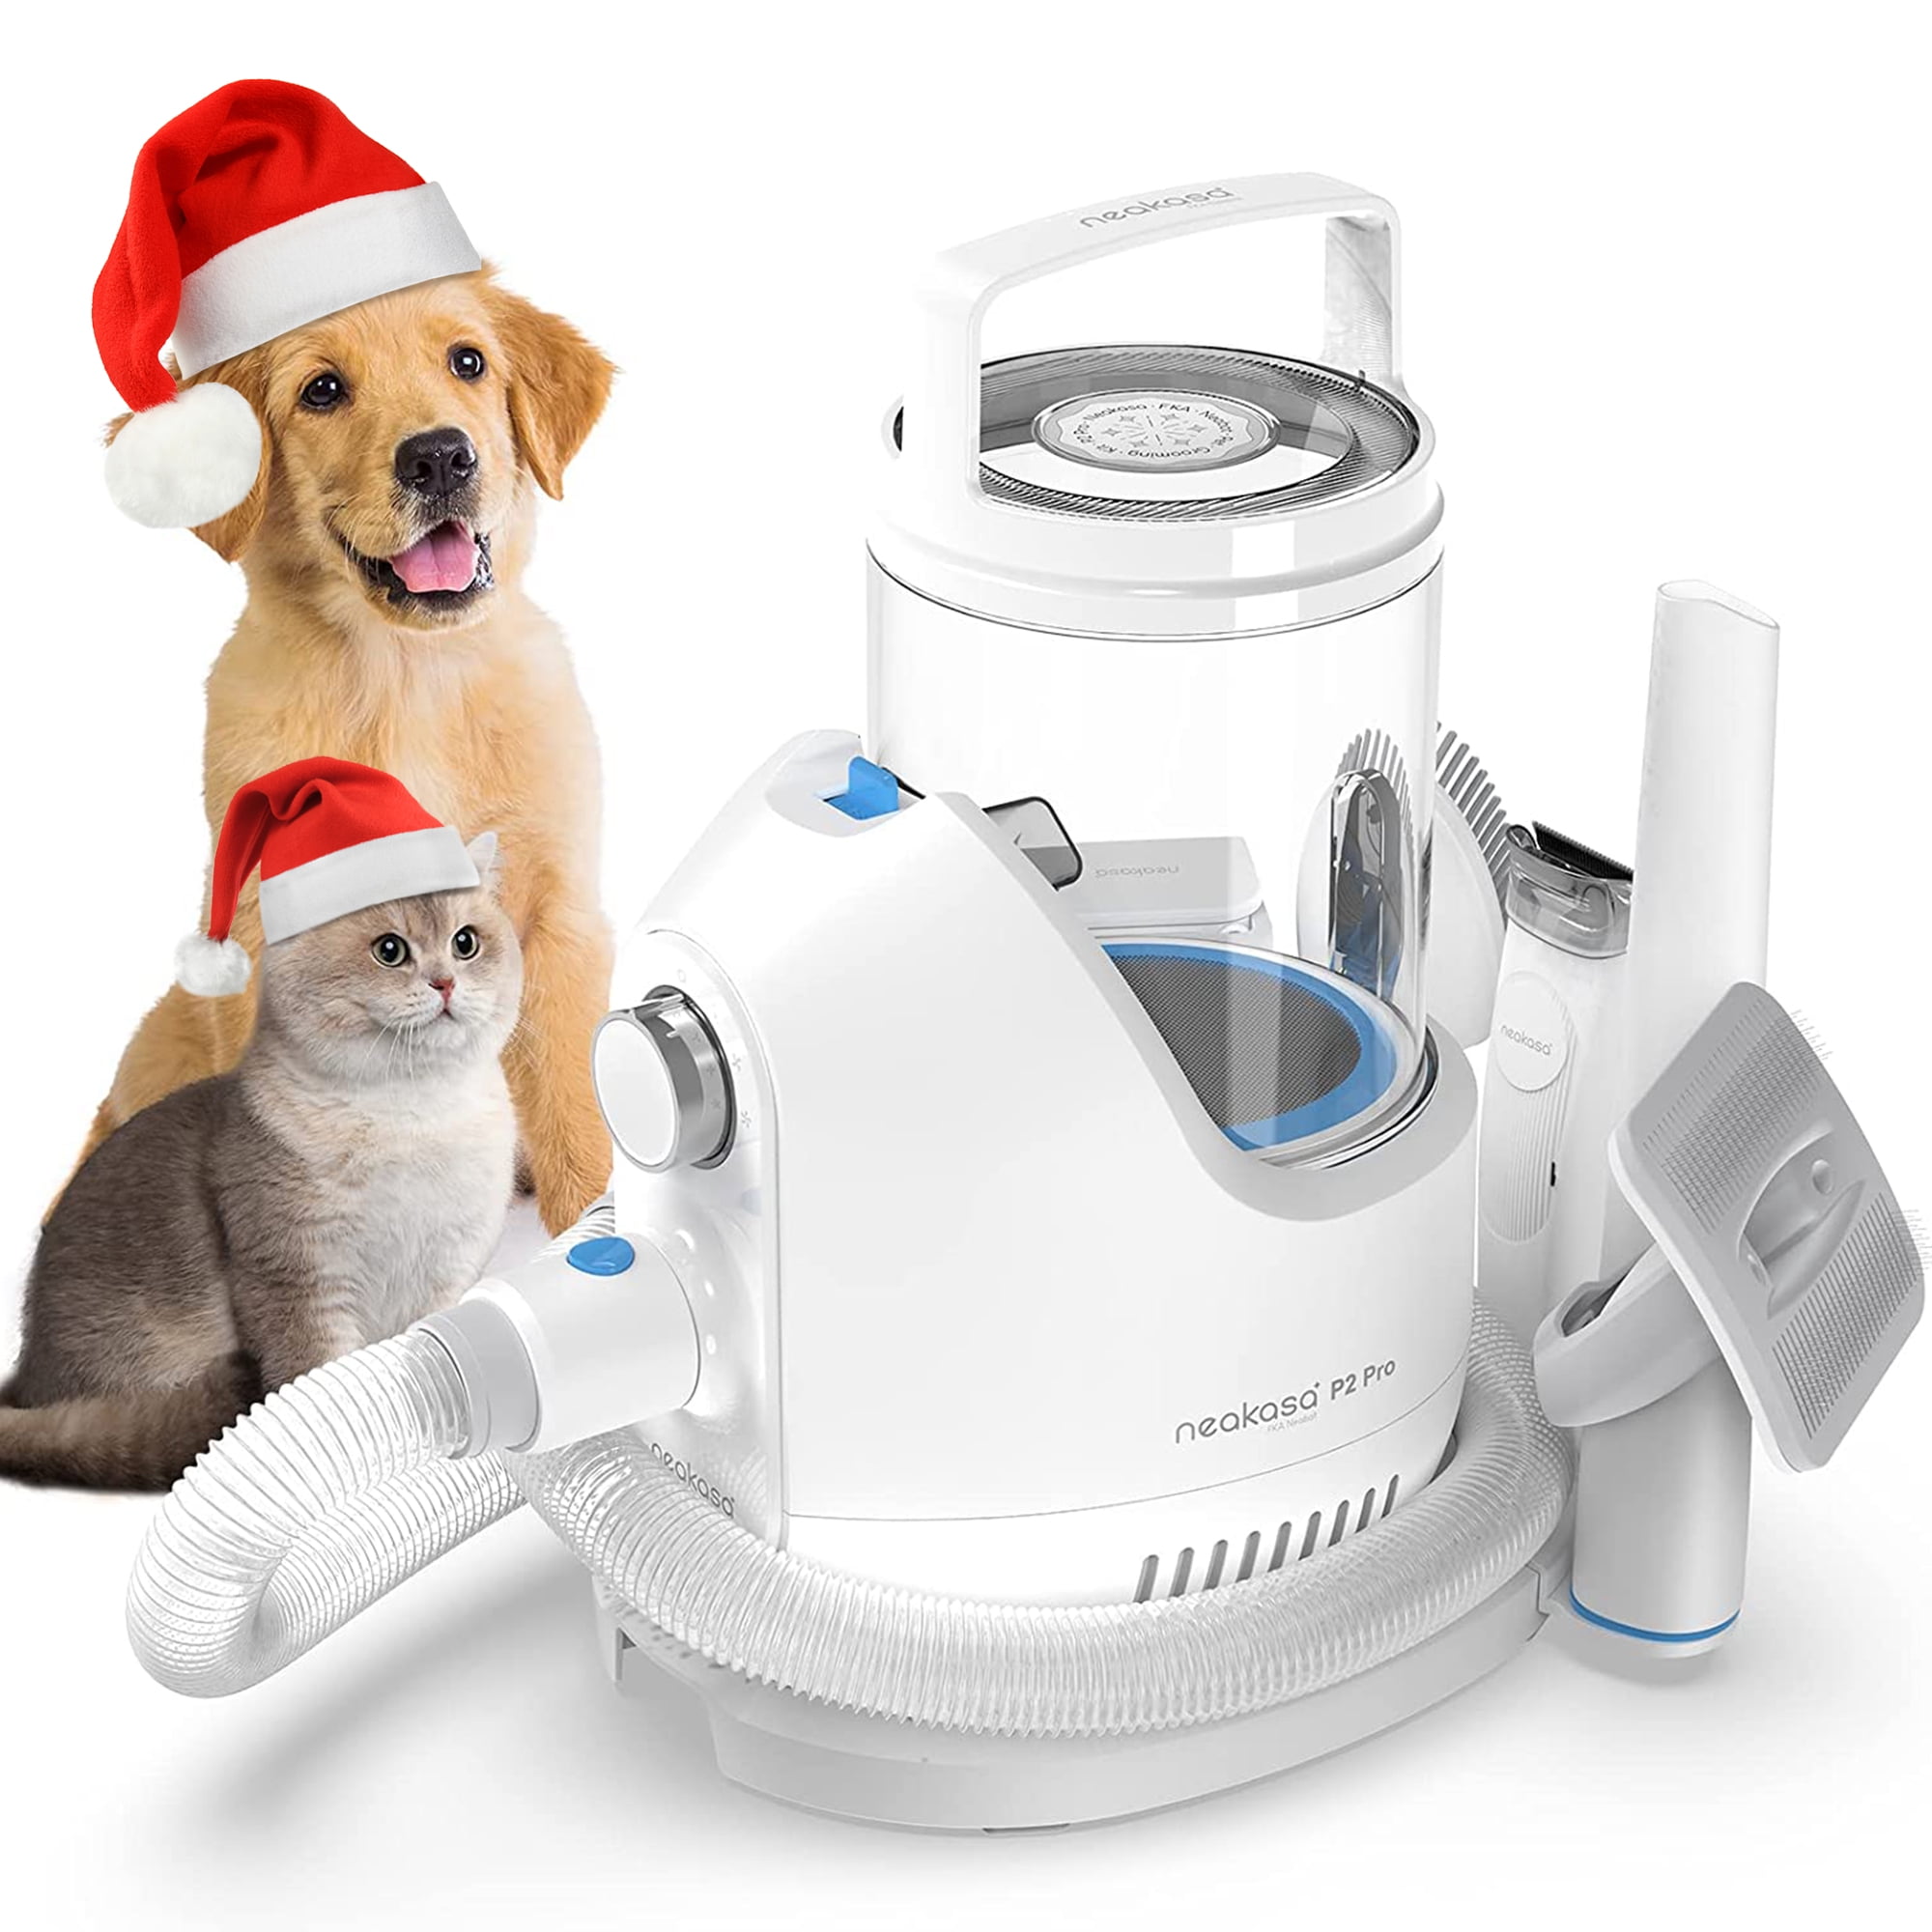 Neakasa P2 Pro Dog Grooming Kit, 10.5KPa Pet Grooming Vacuum